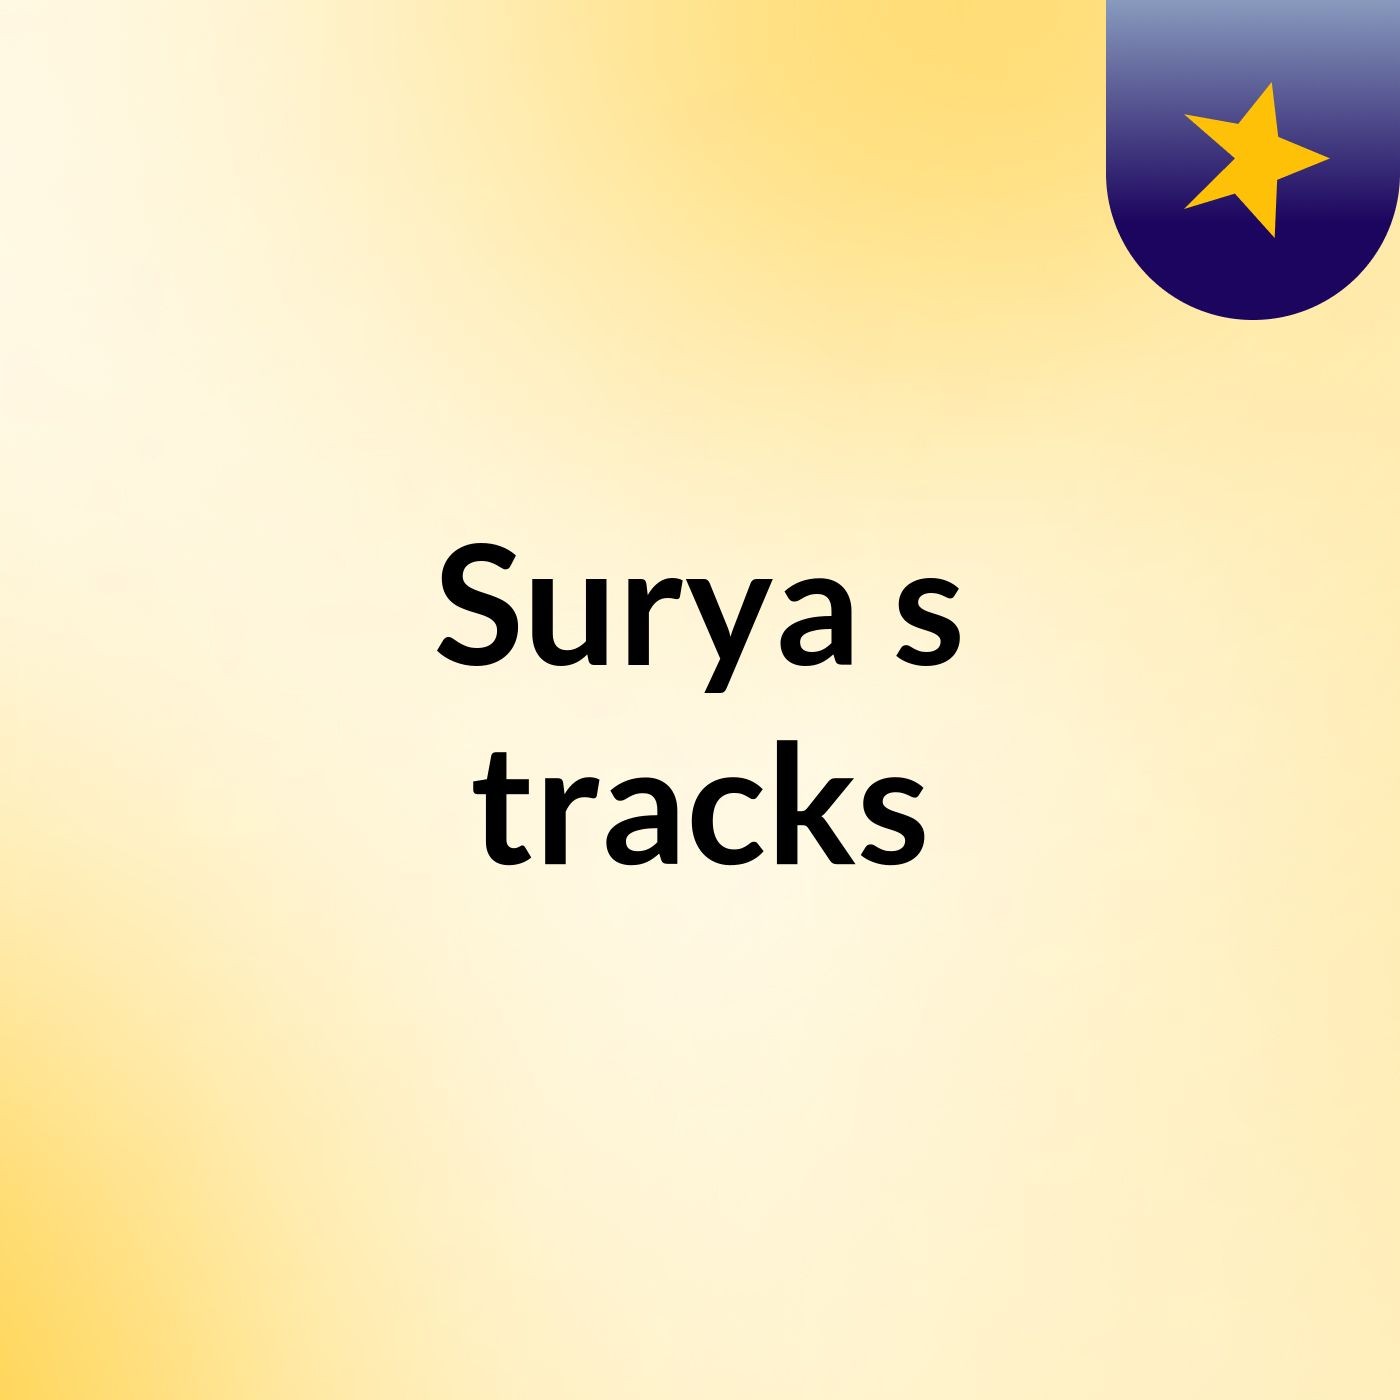 Surya's tracks